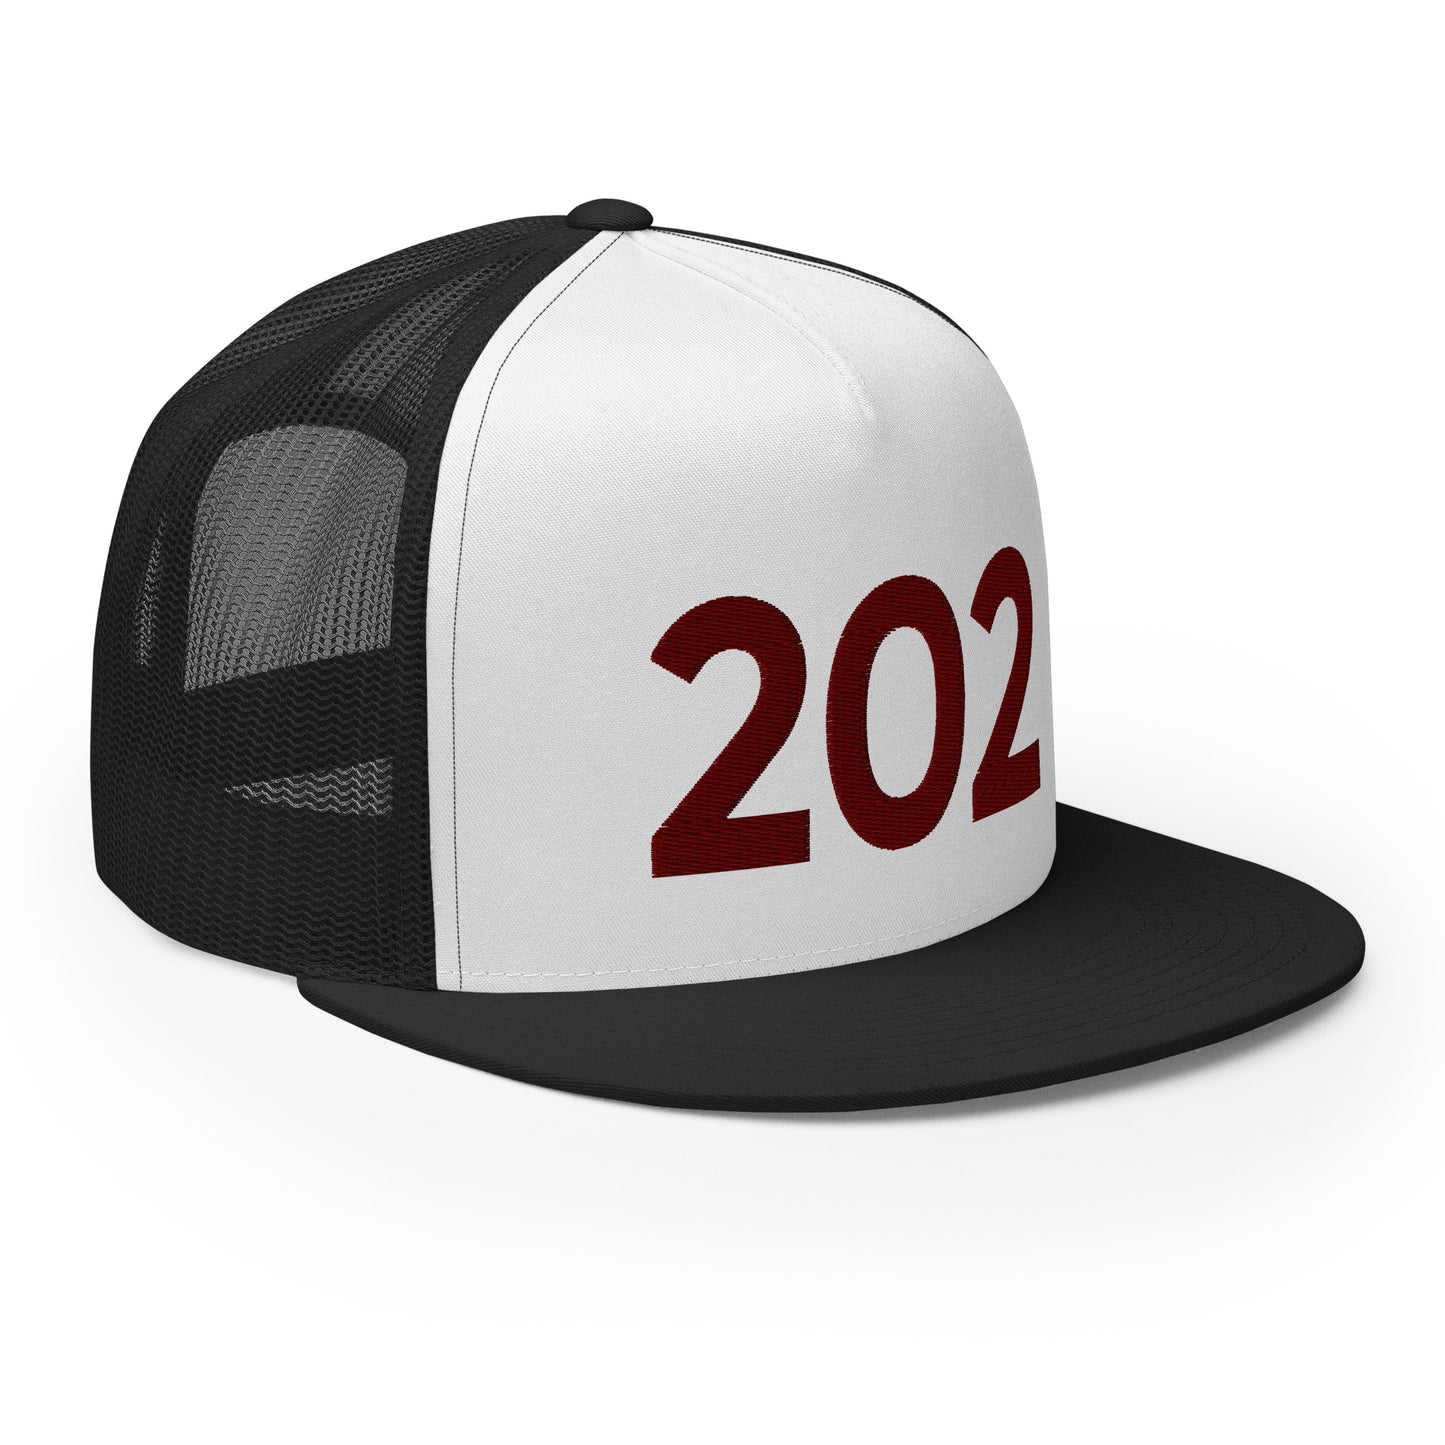 202 DC Proud Trucker Hat